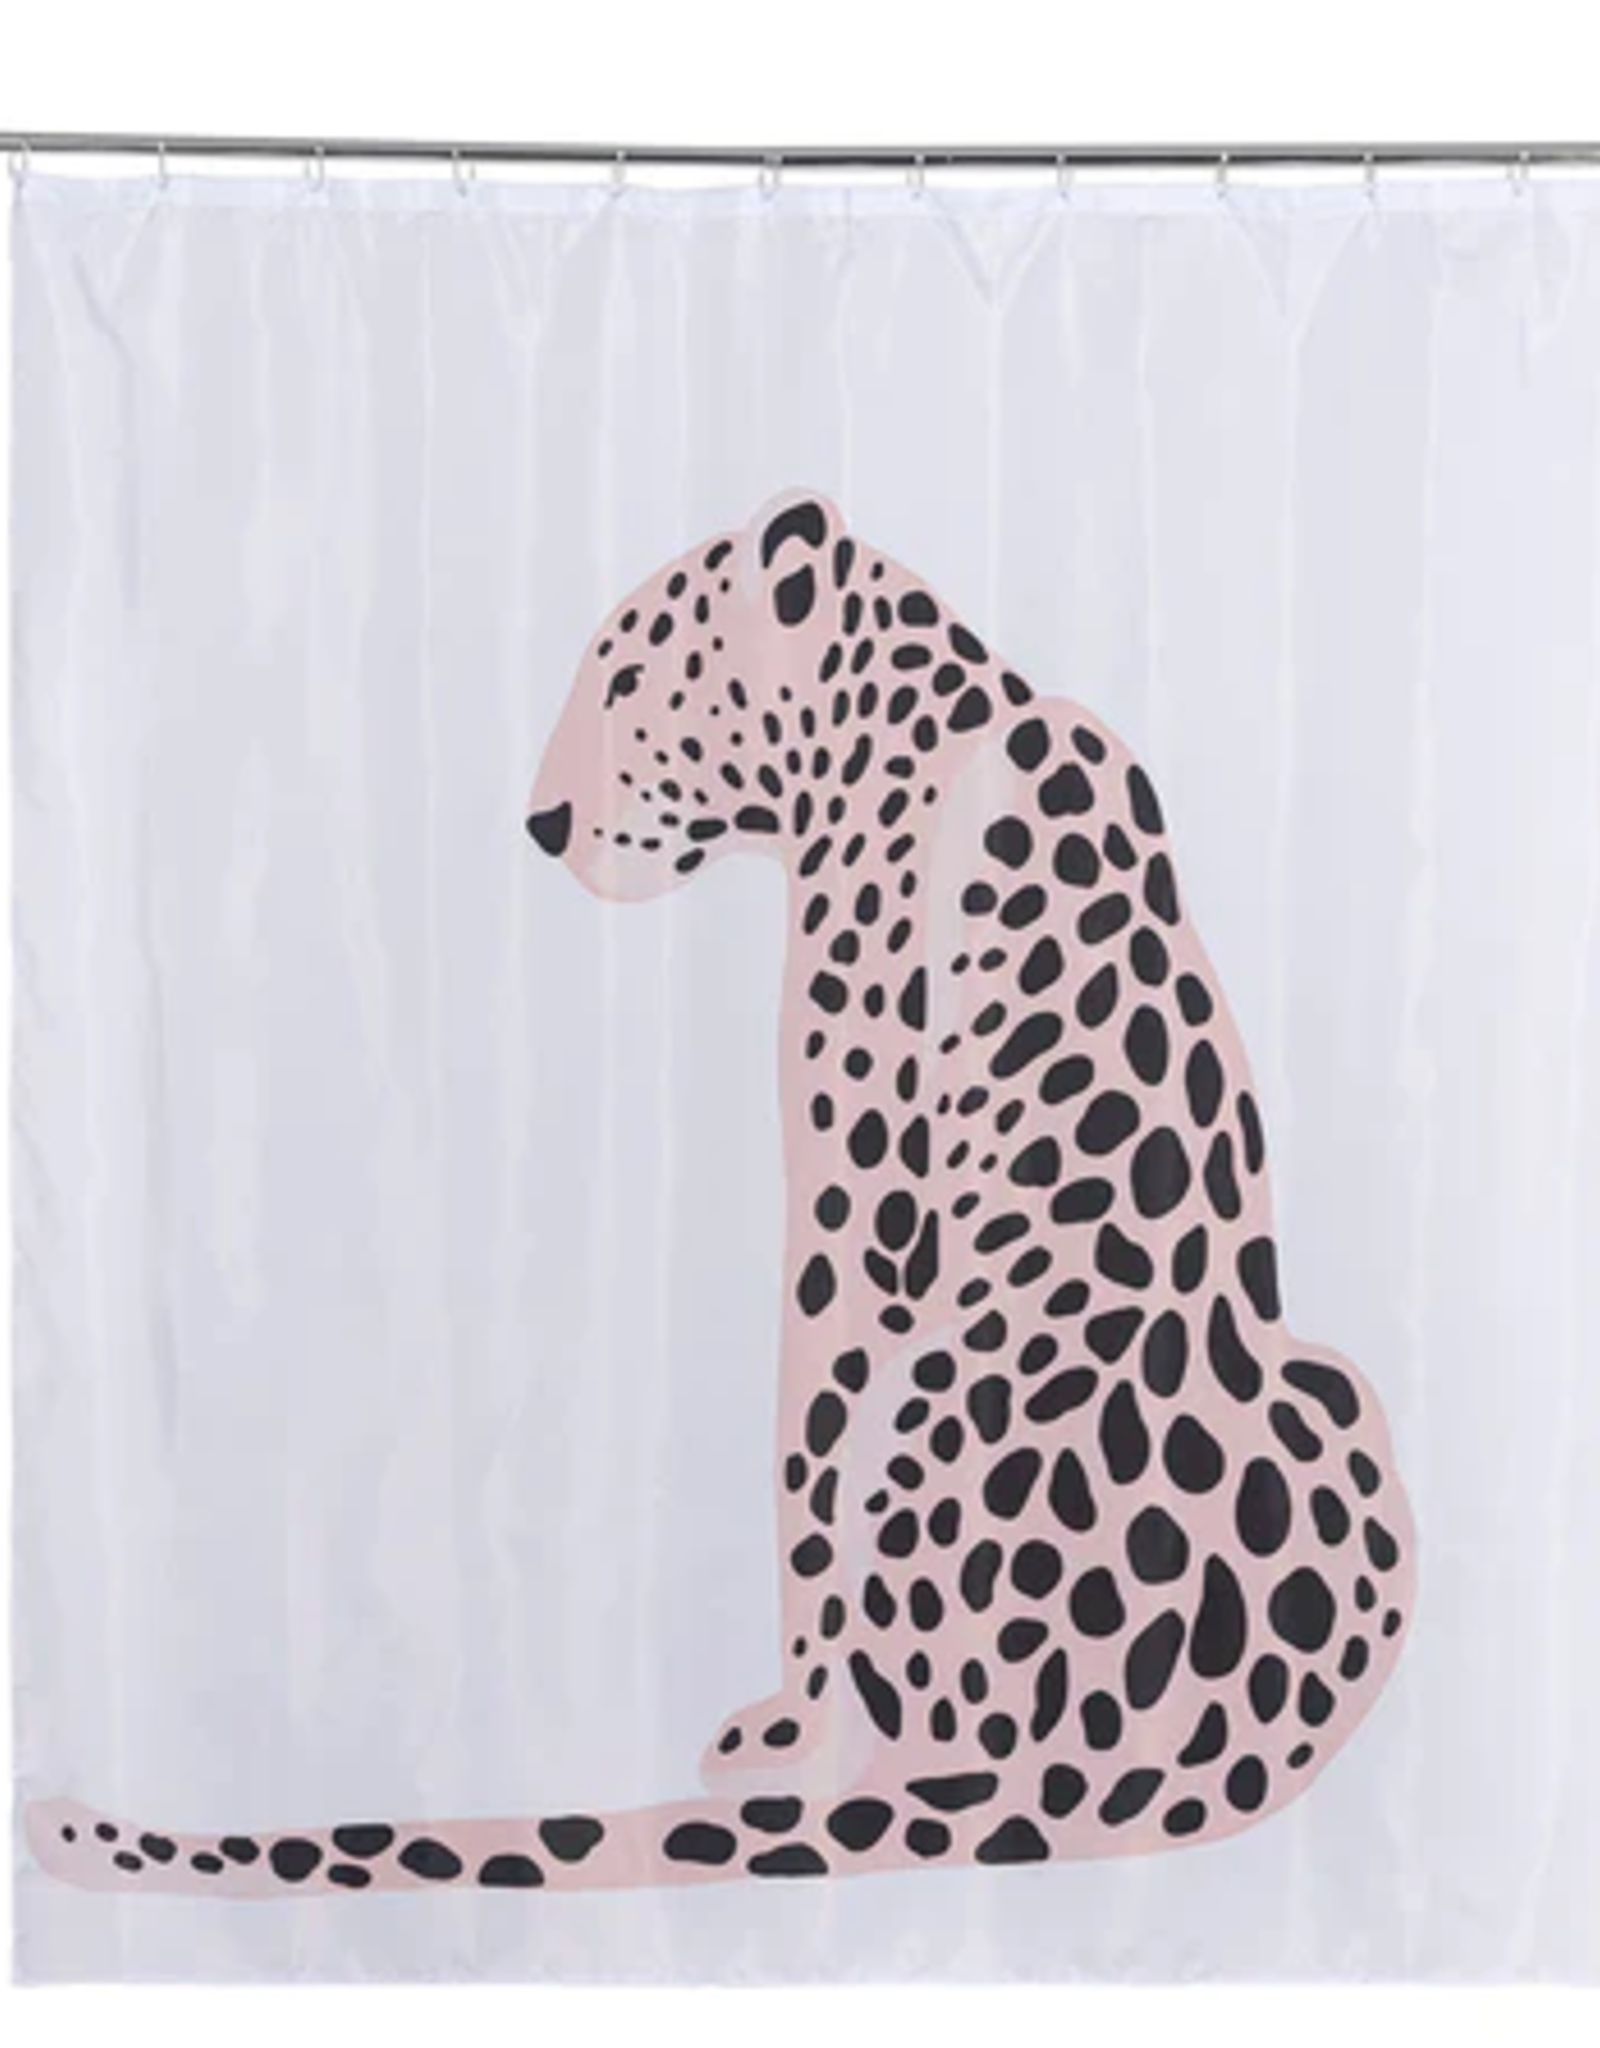 Shiraleah Shower Curtain - Leopard White